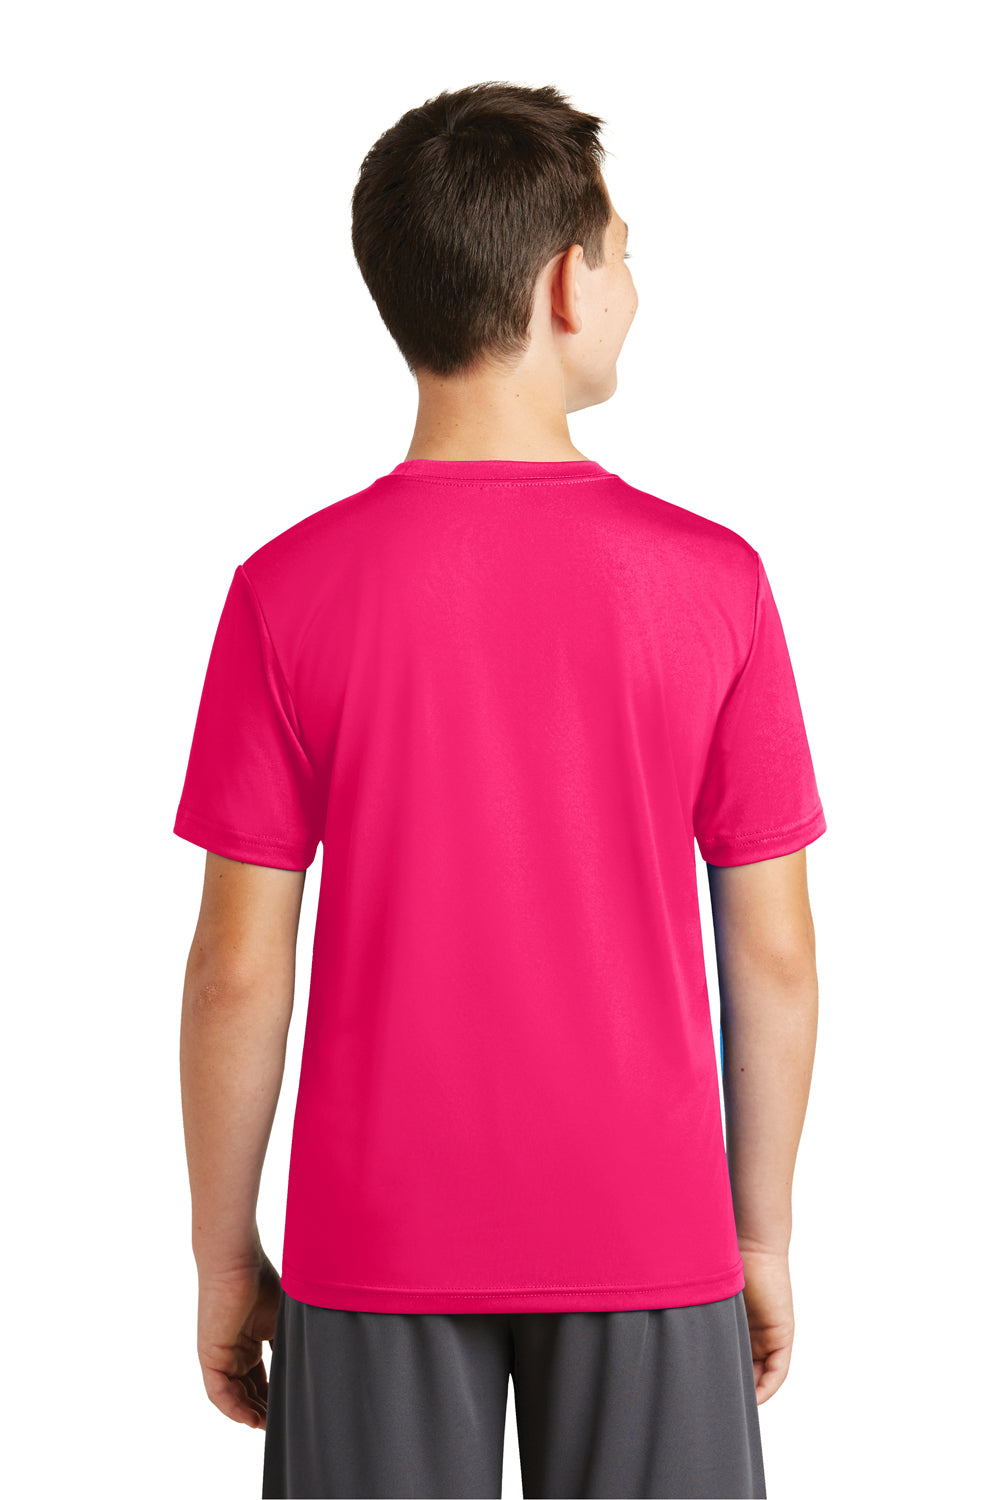 Sport-Tek YST320 Youth Tough Moisture Wicking Short Sleeve Crewneck T-Shirt Fuchsia Pink Back